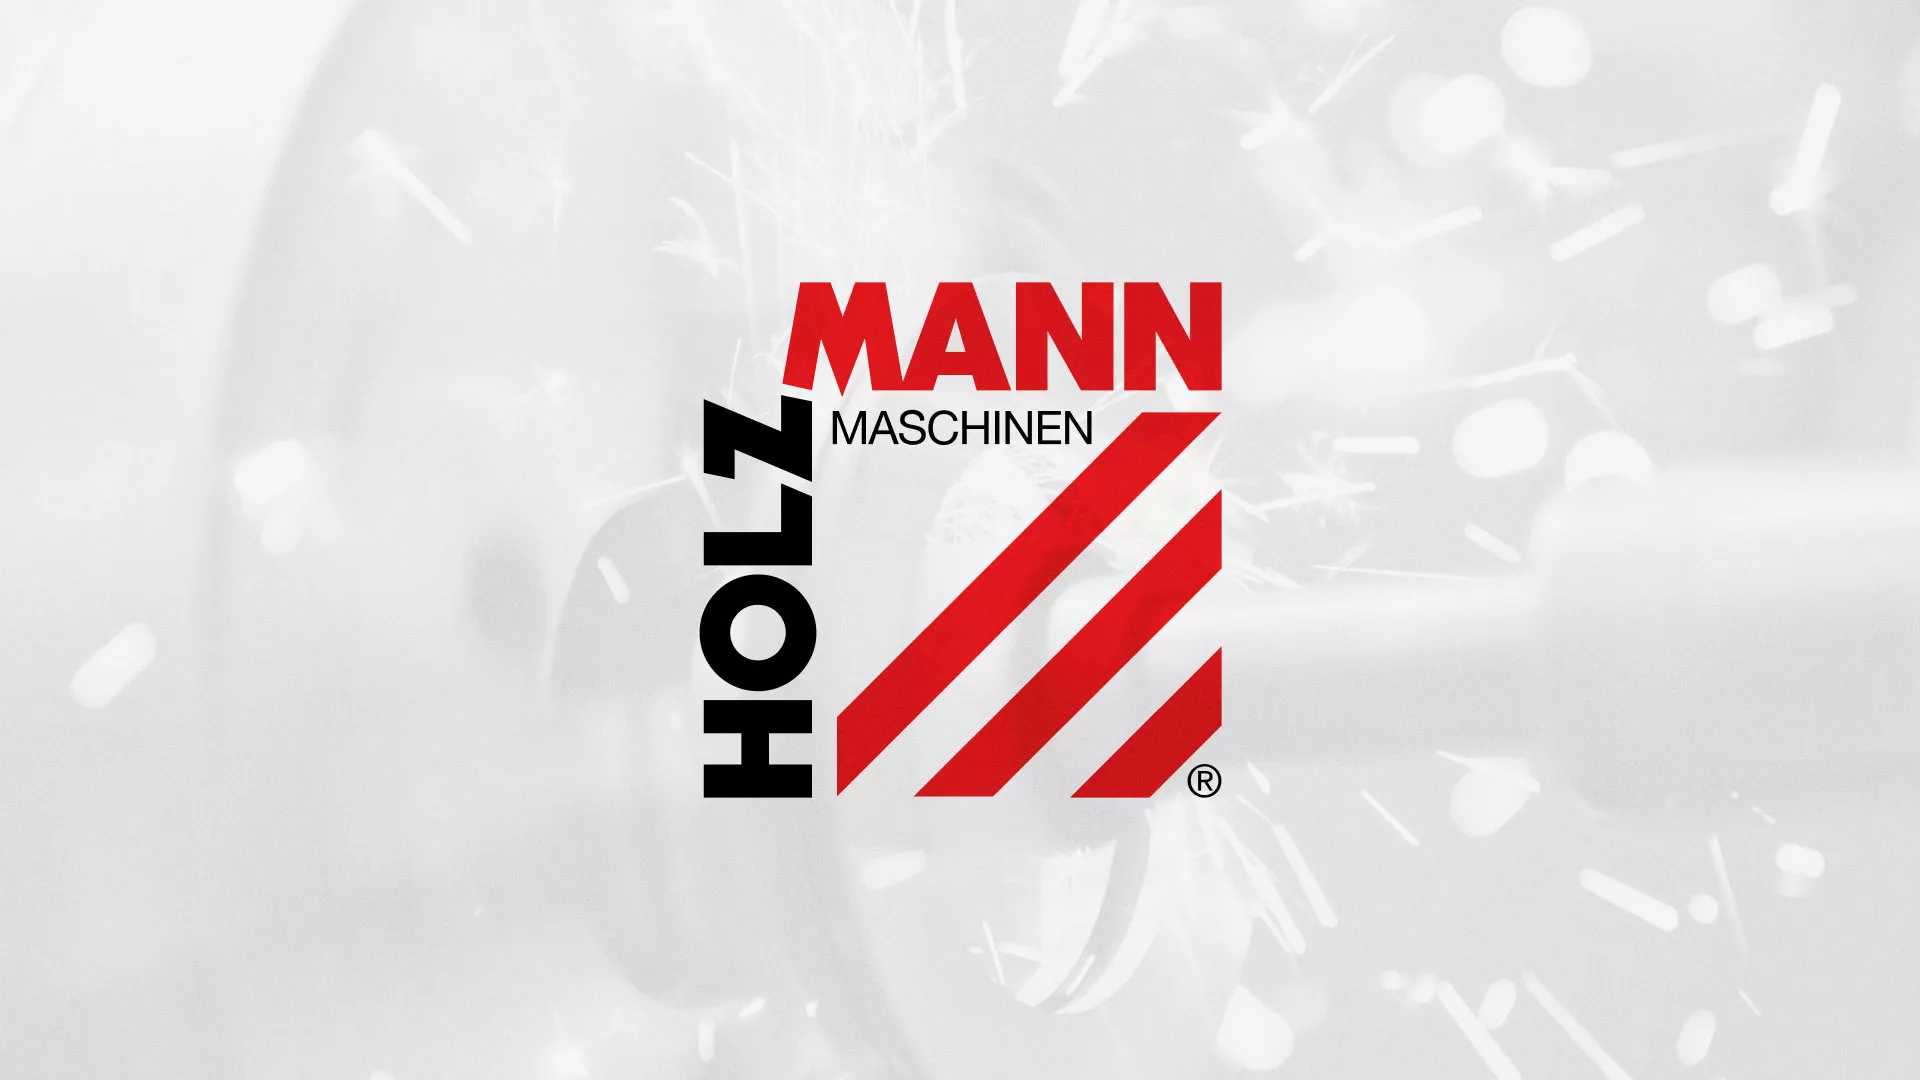 Создание сайта компании «HOLZMANN Maschinen GmbH» в Курске